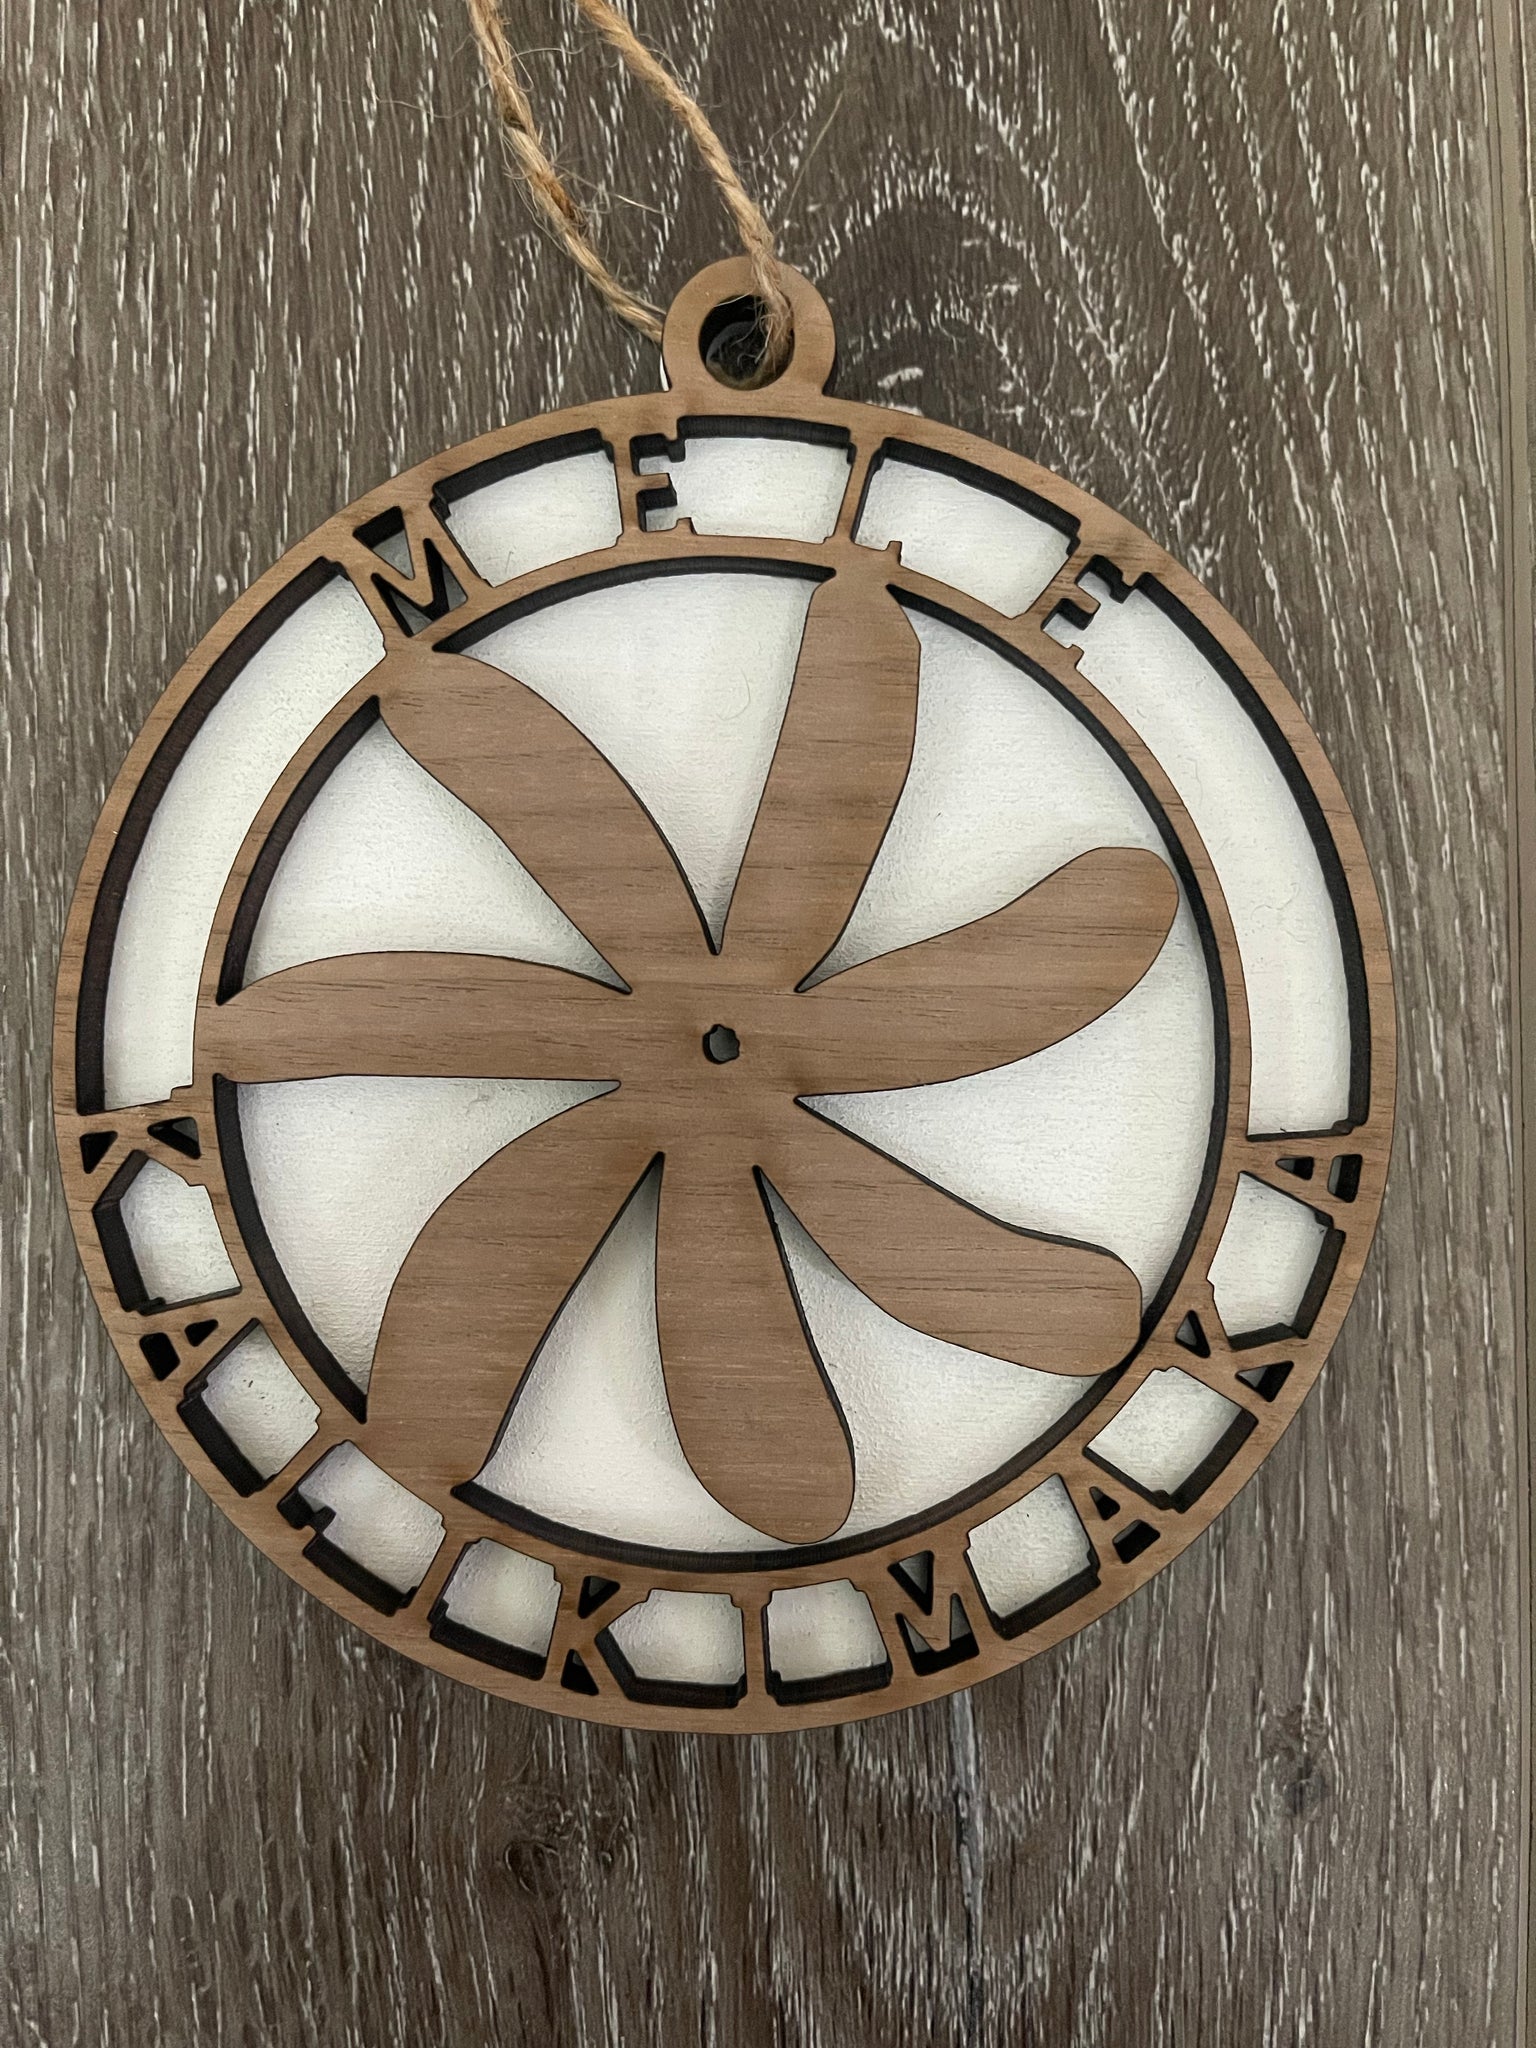 Mele Kalikimaka Islander Ornament